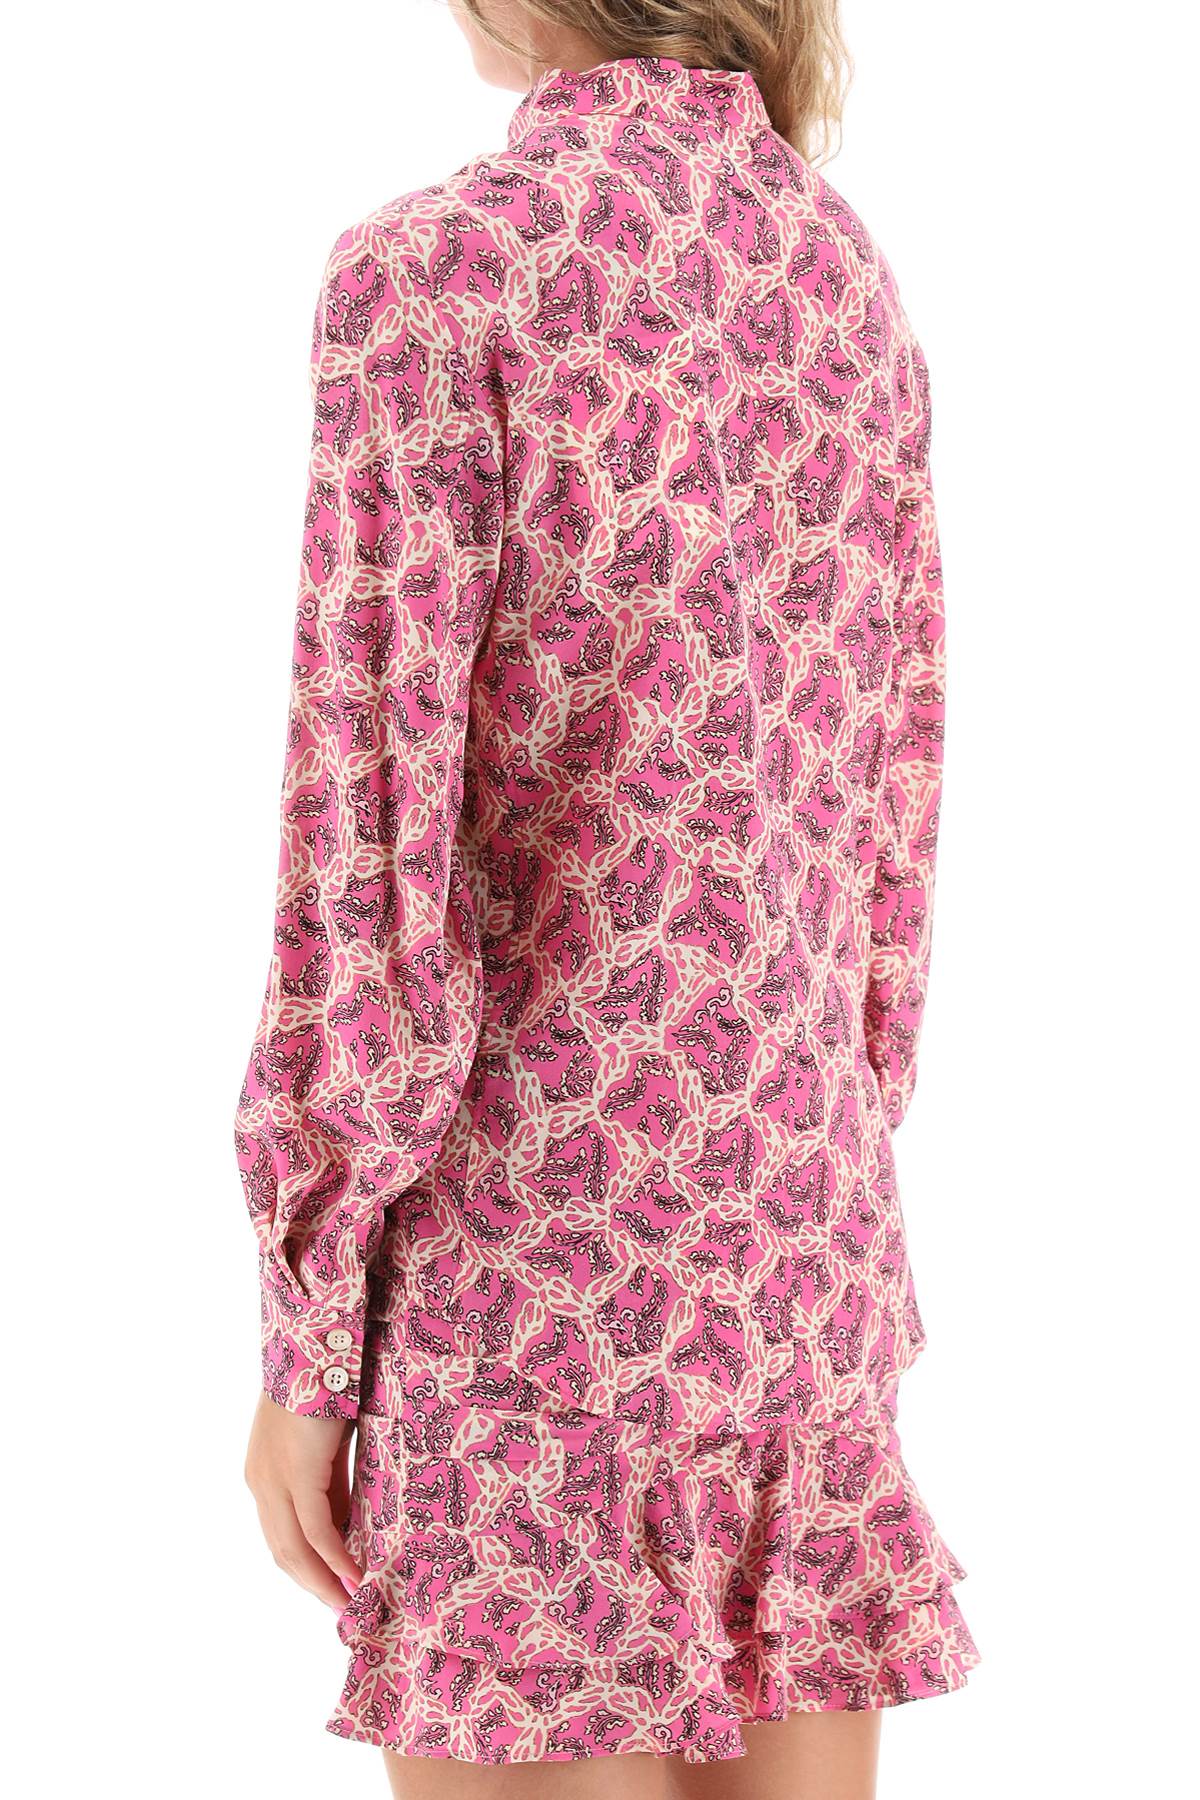 Isabel marant ilda silk shirt with paisley print-2